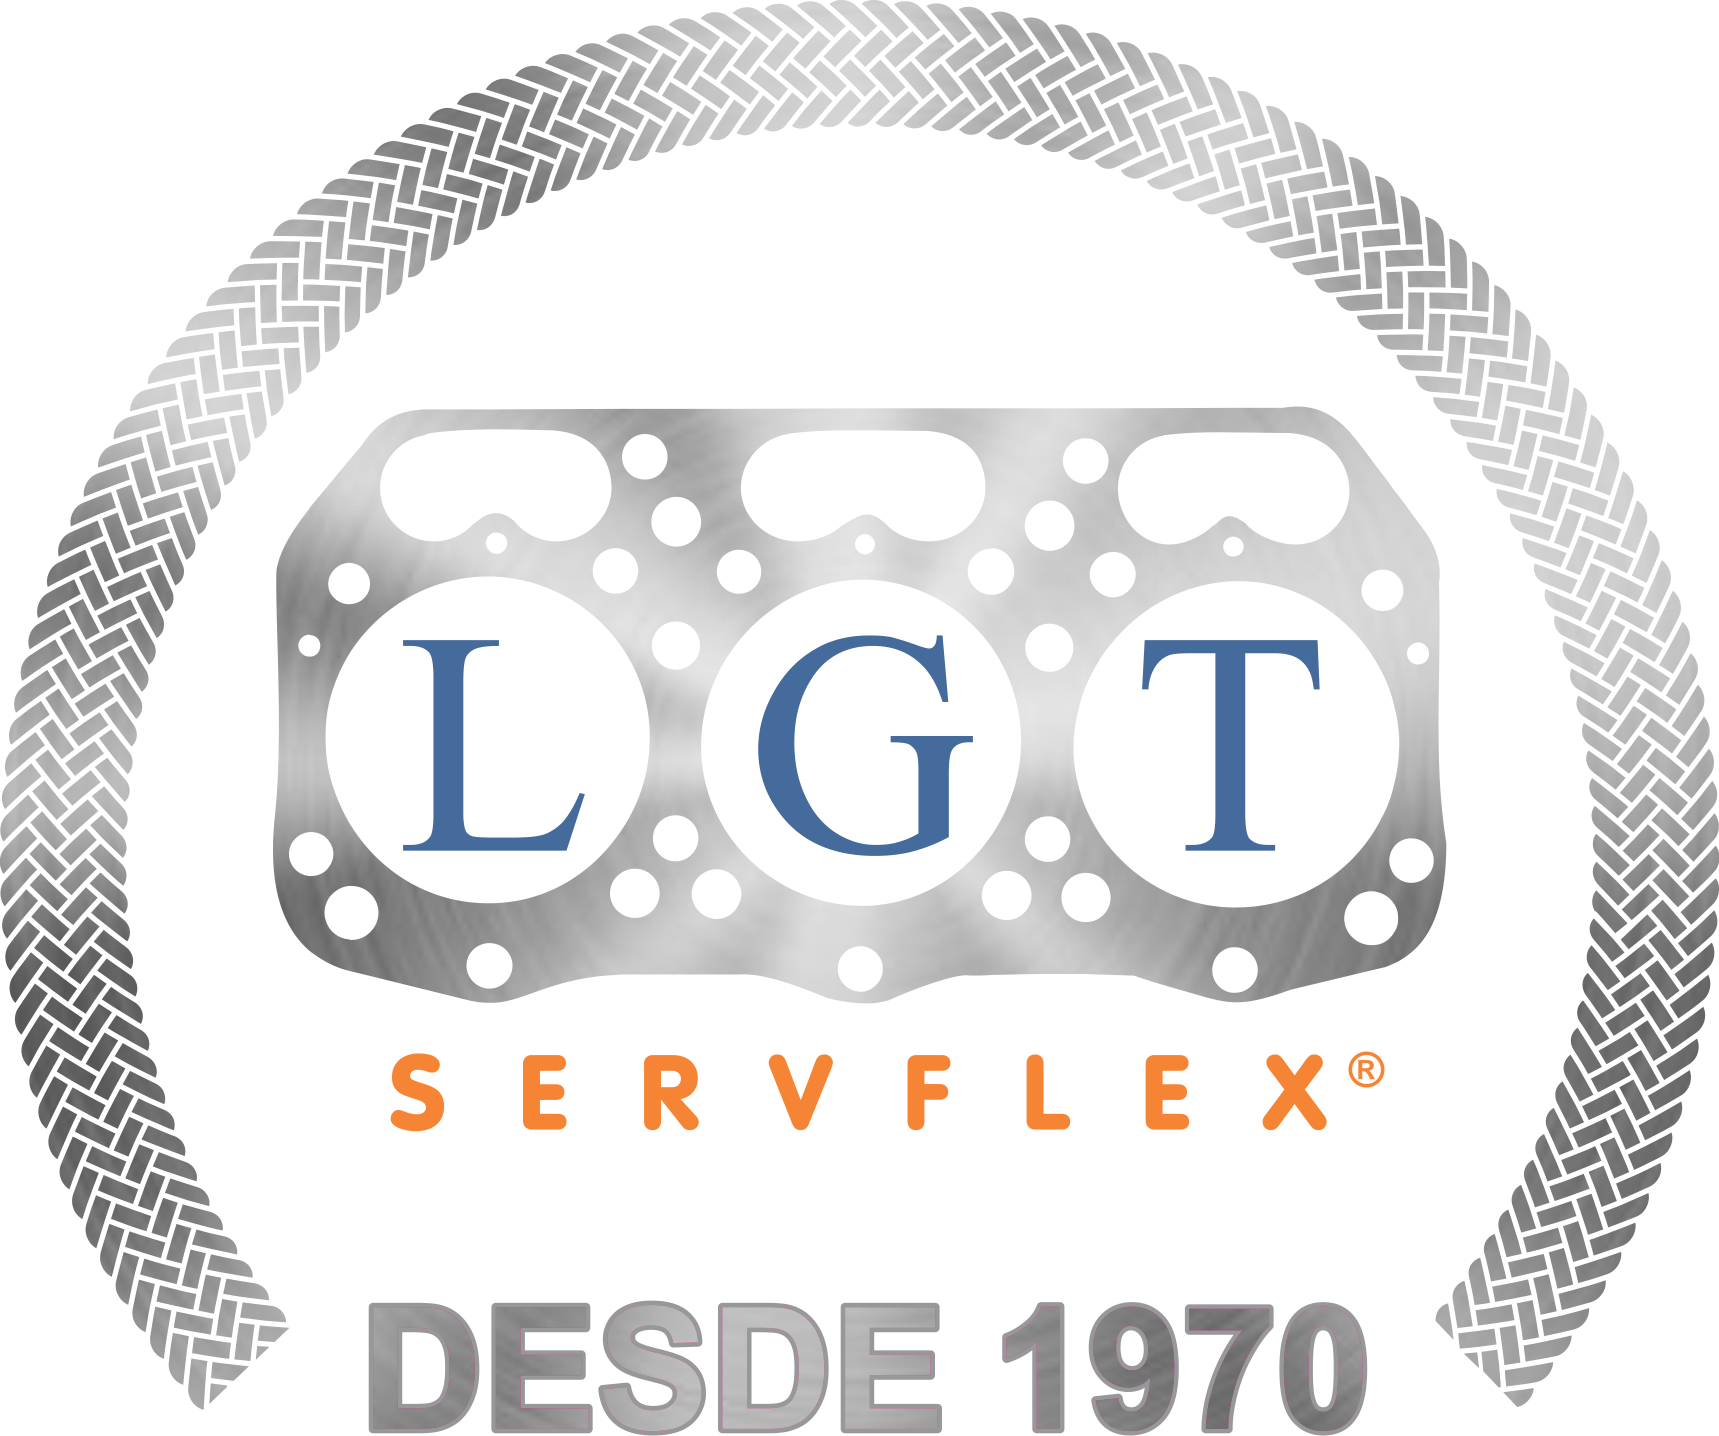 Logo LGT